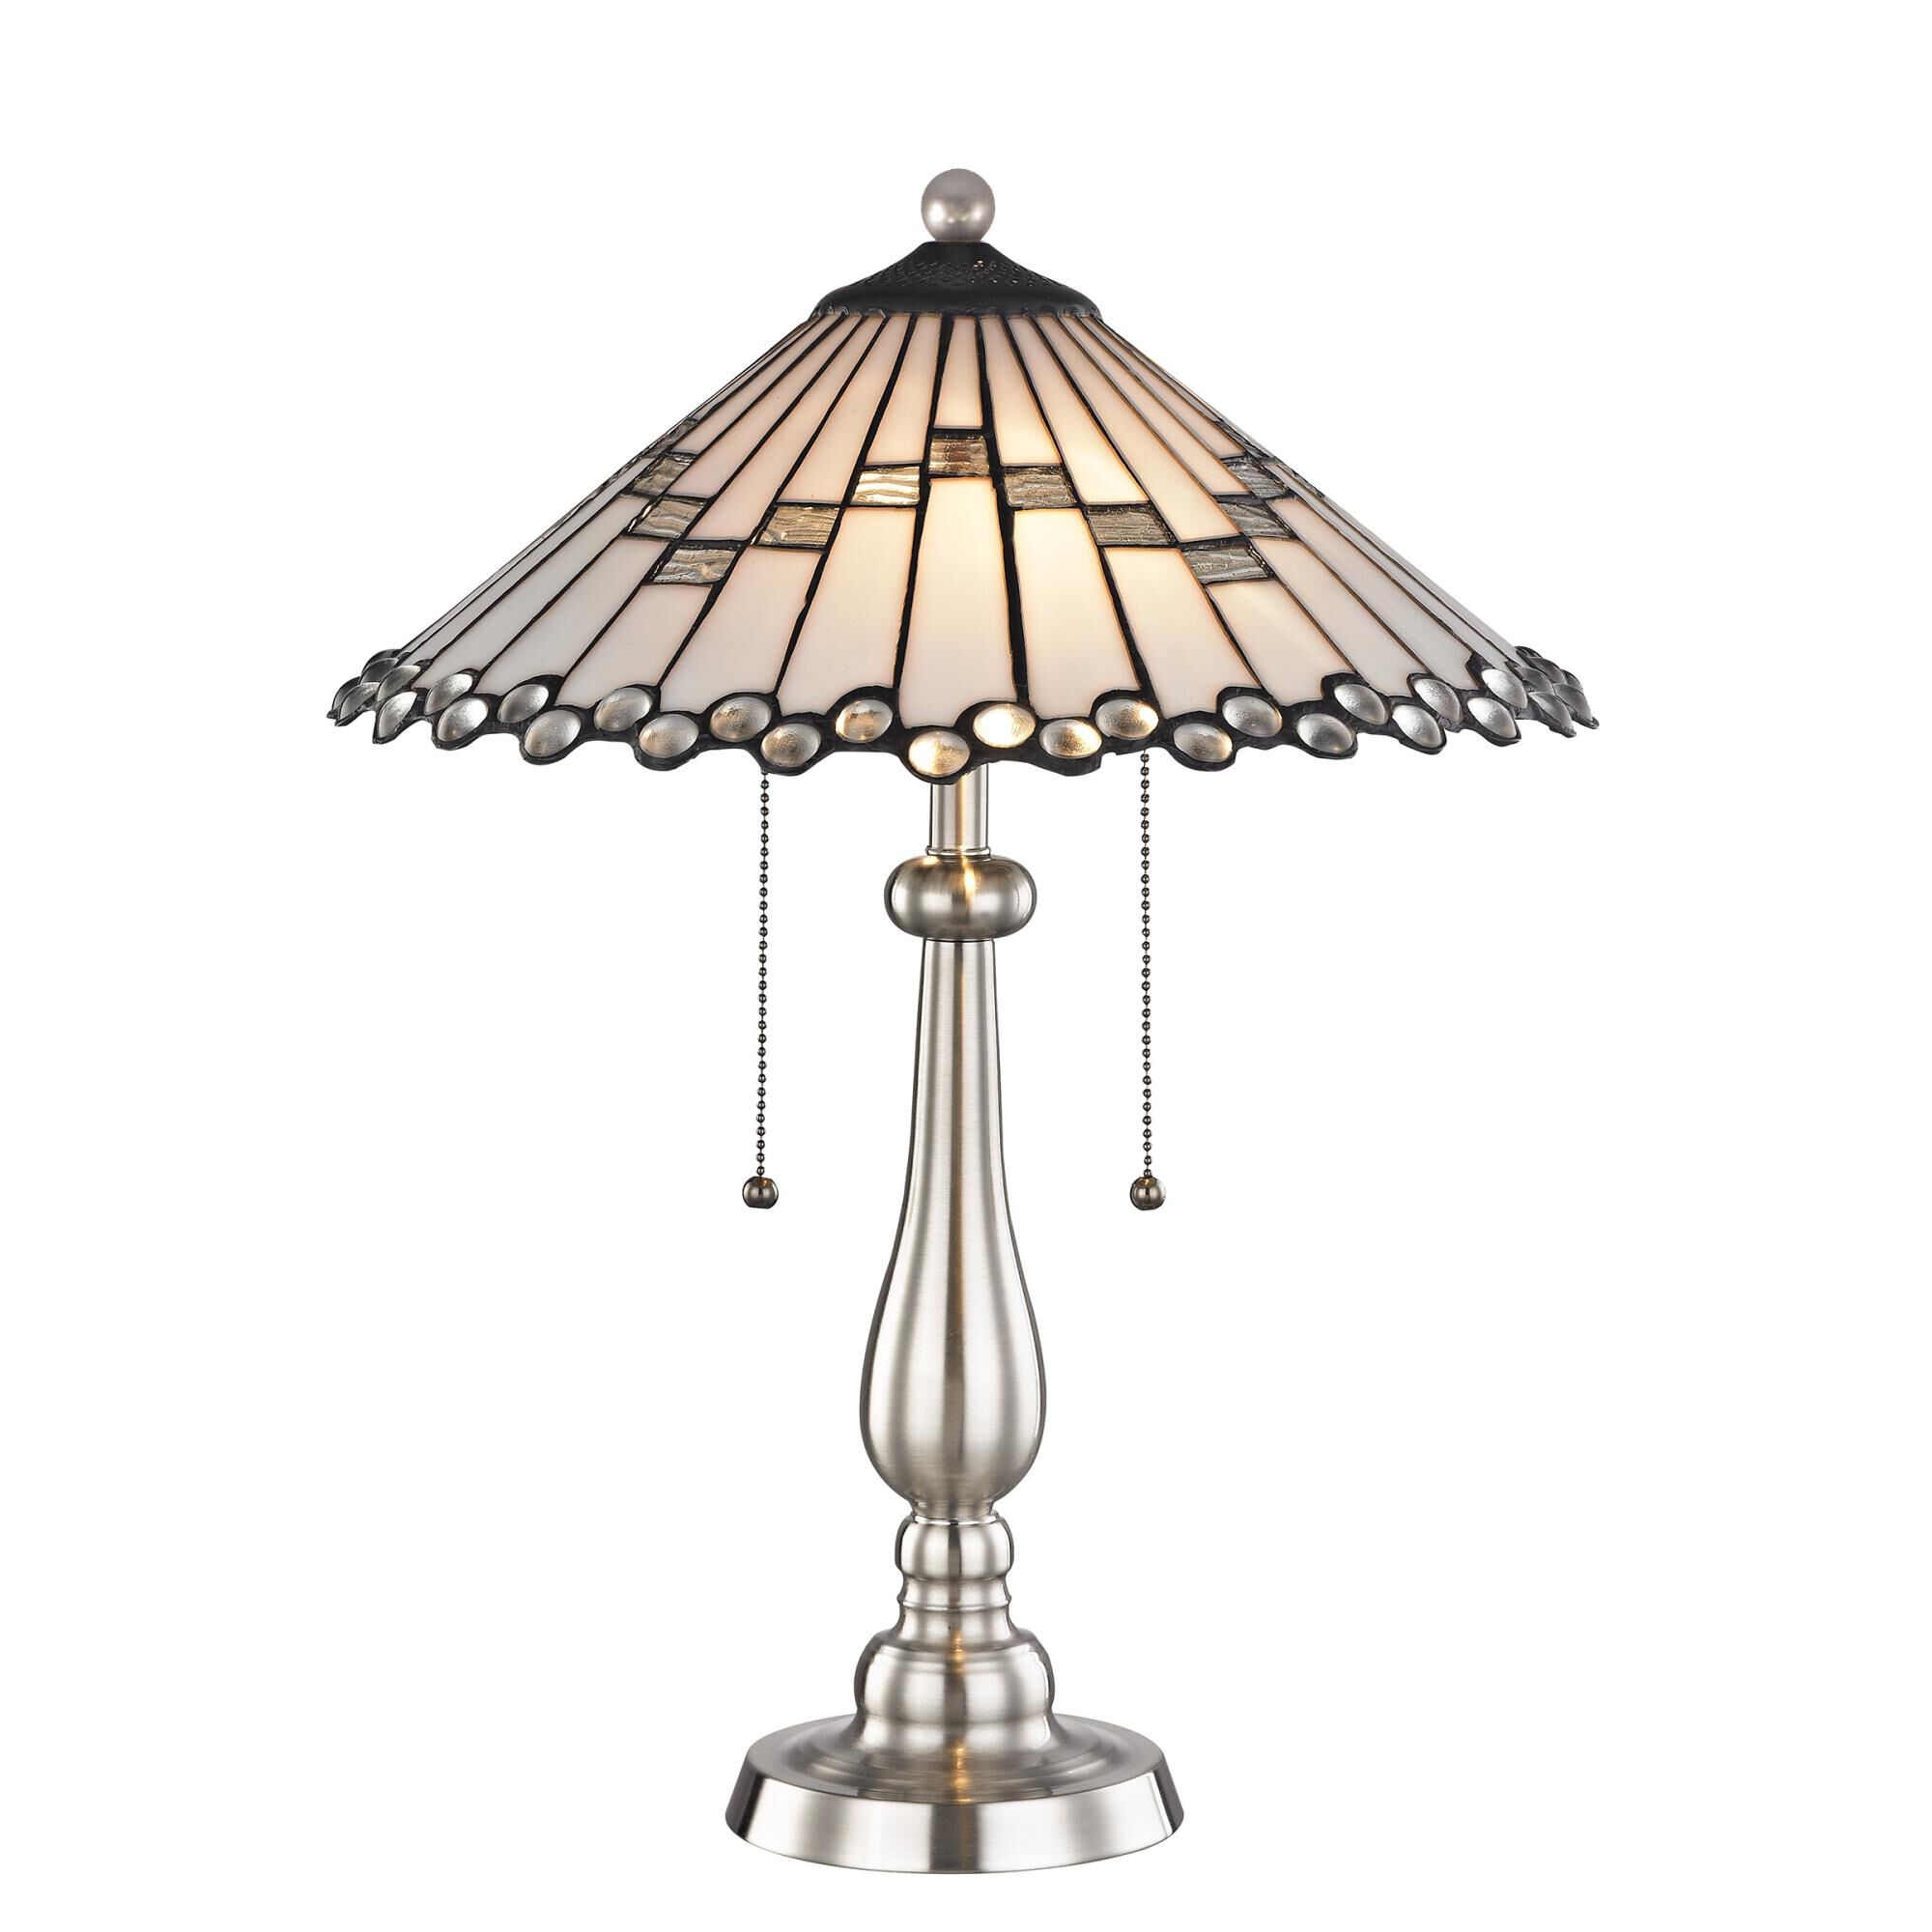 Aldridge Tiffany Table Lamp